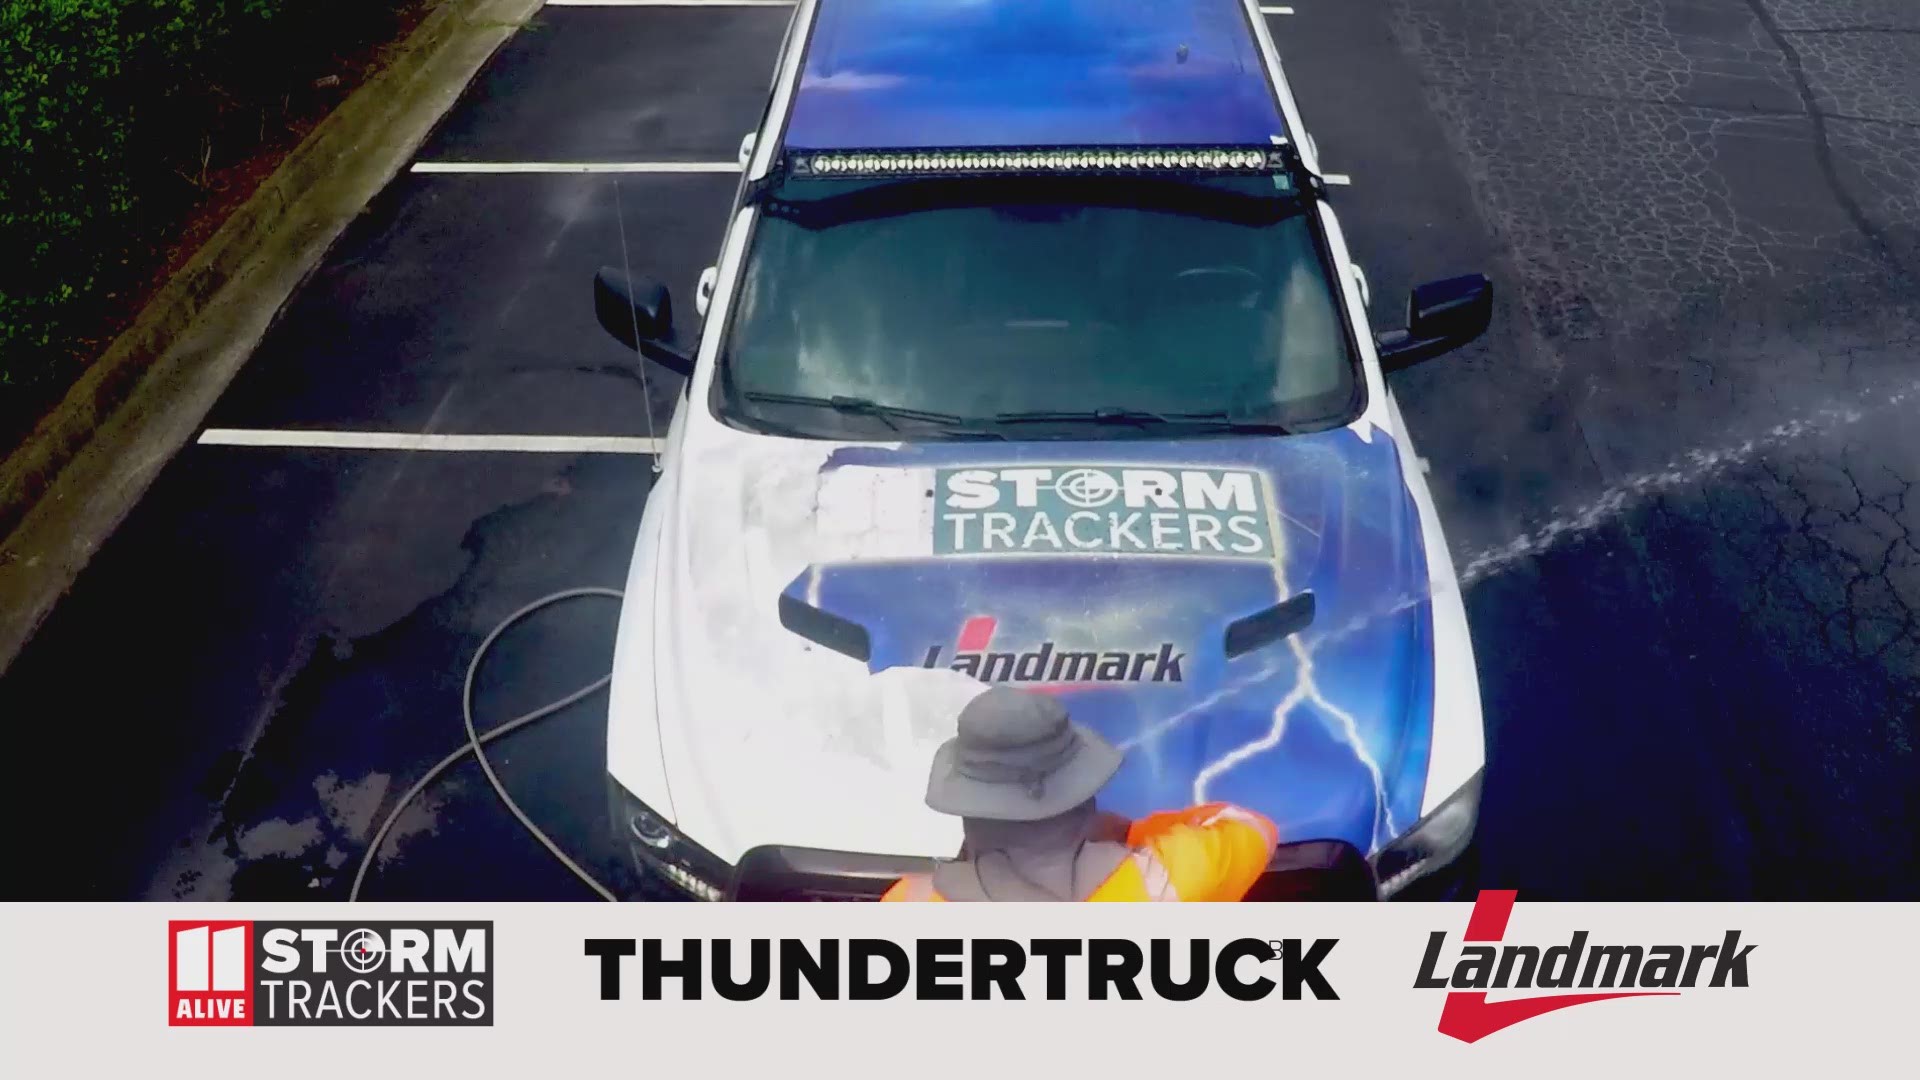 The all-new 11Alive StormTracker ThunderTruck has landed!